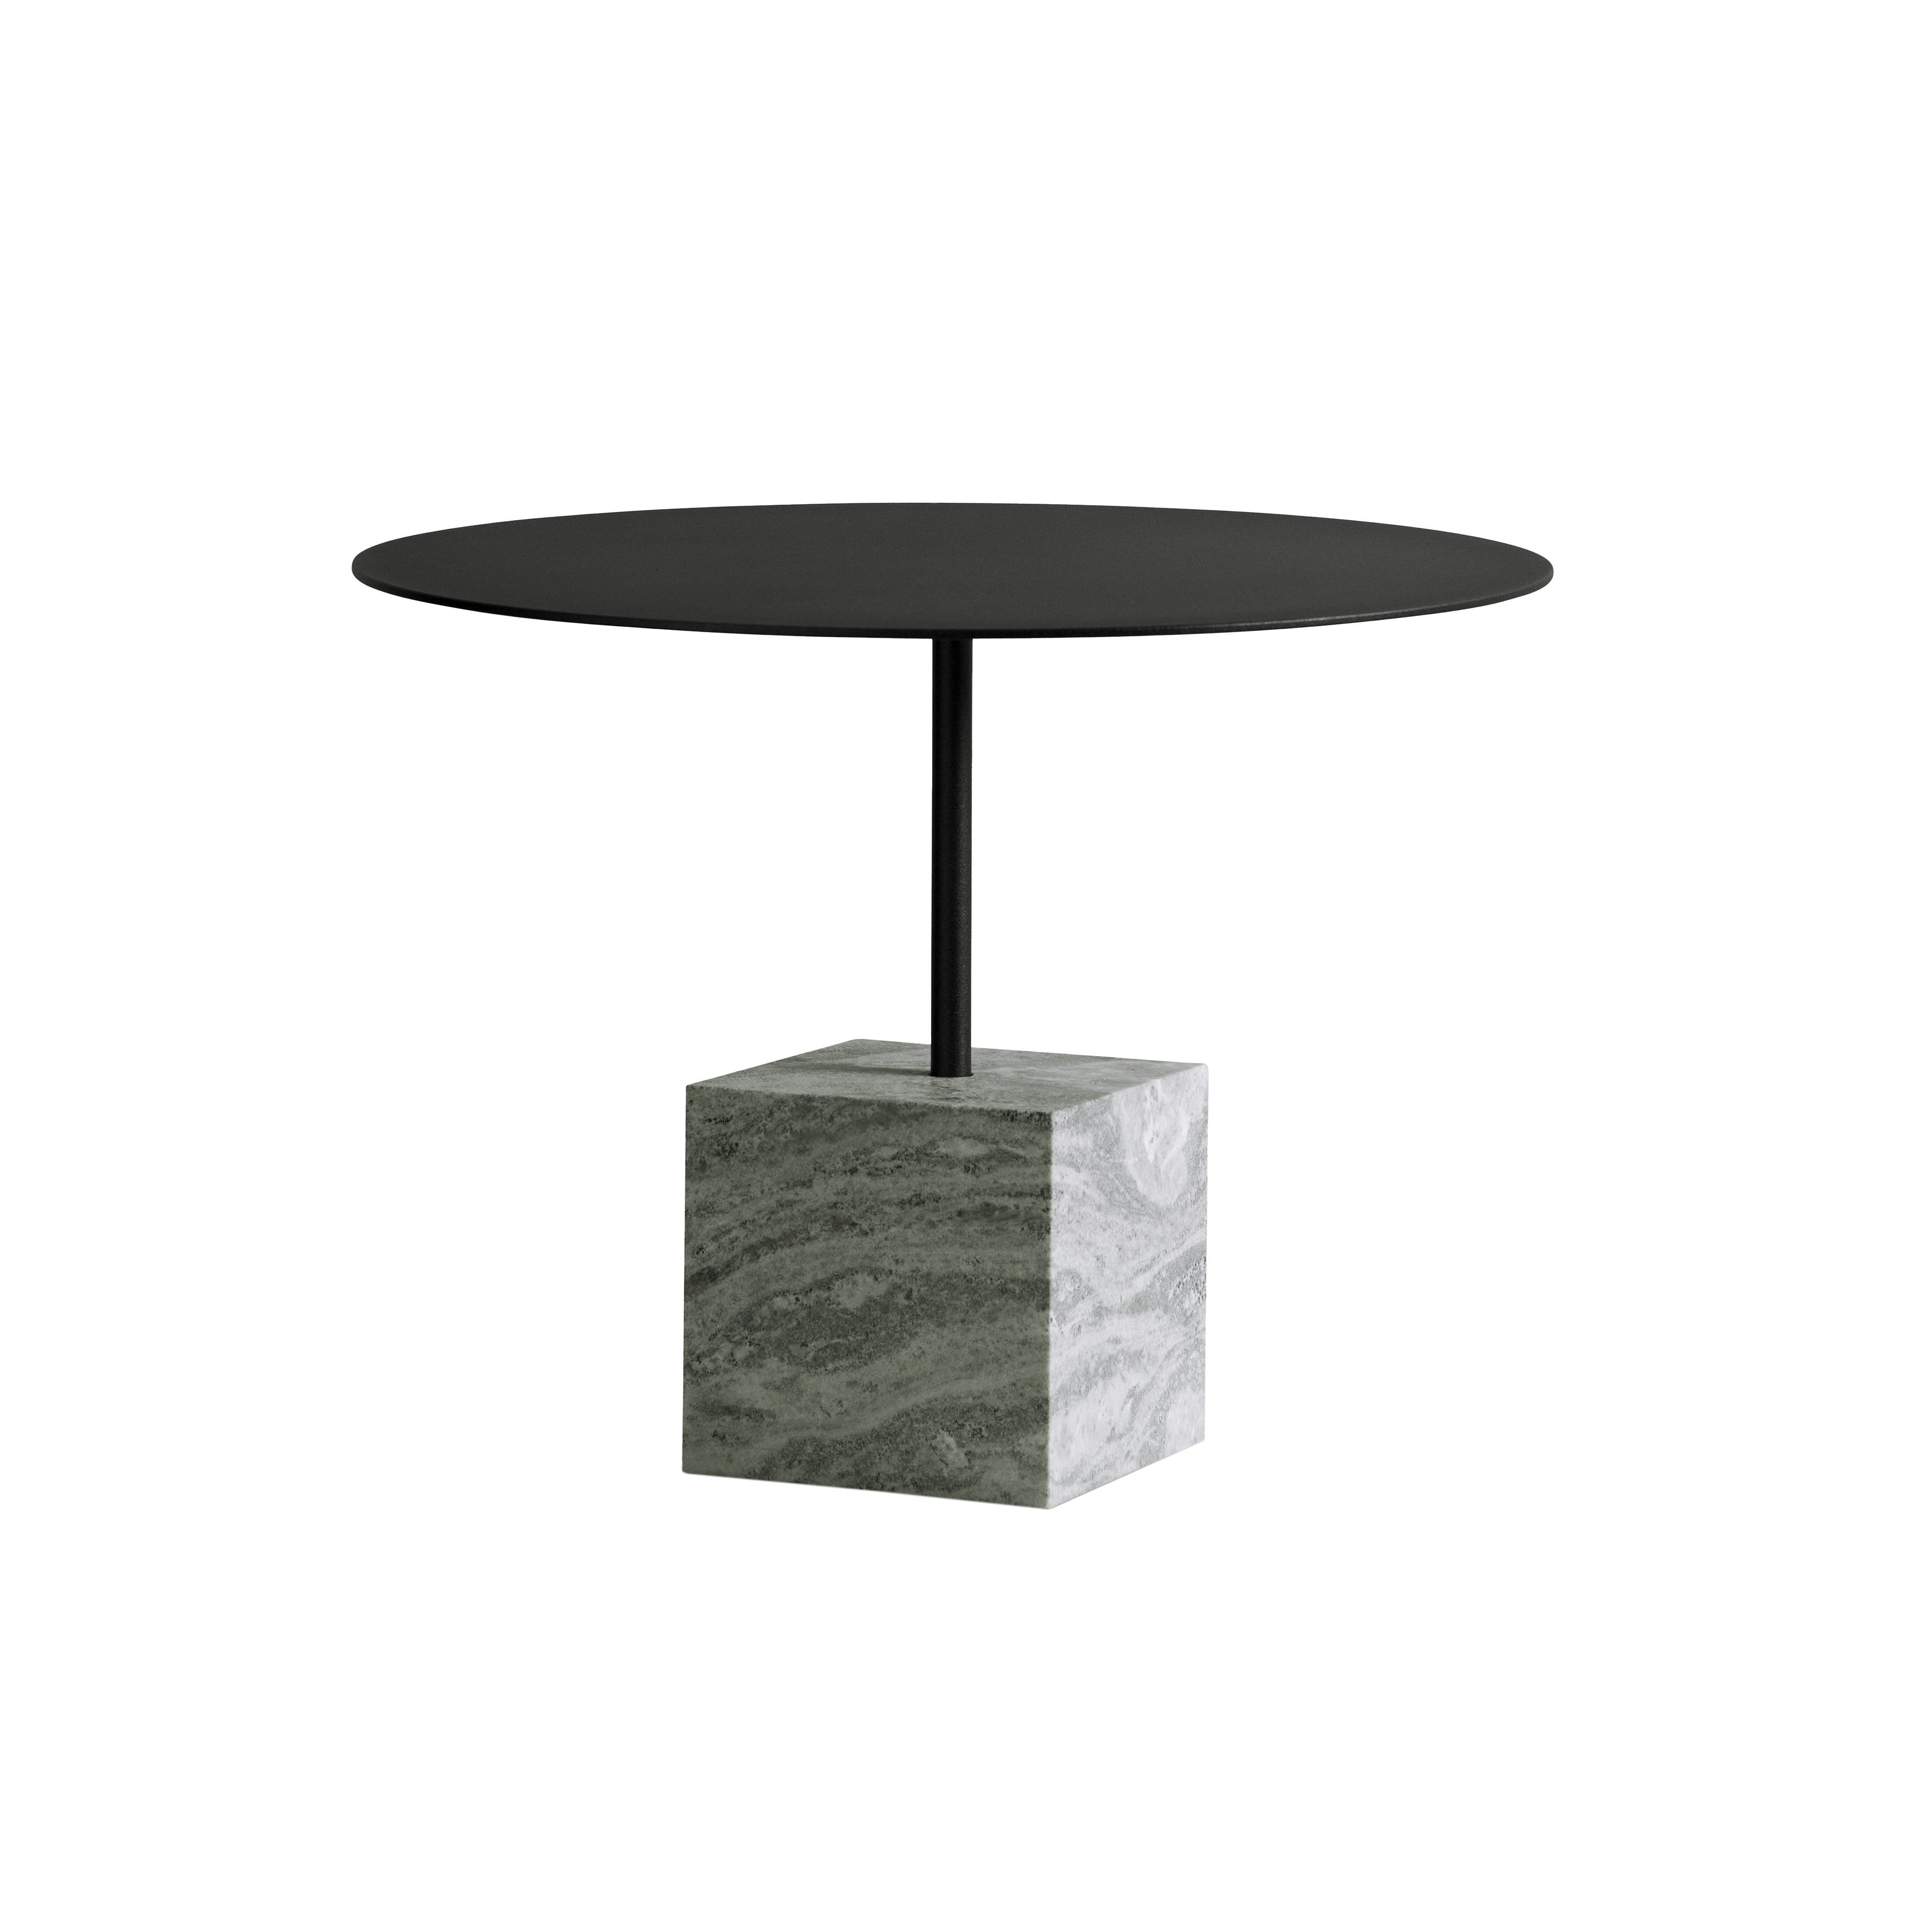 Knockout Lounge Table: Square + Low + Black + Green Kolmarden